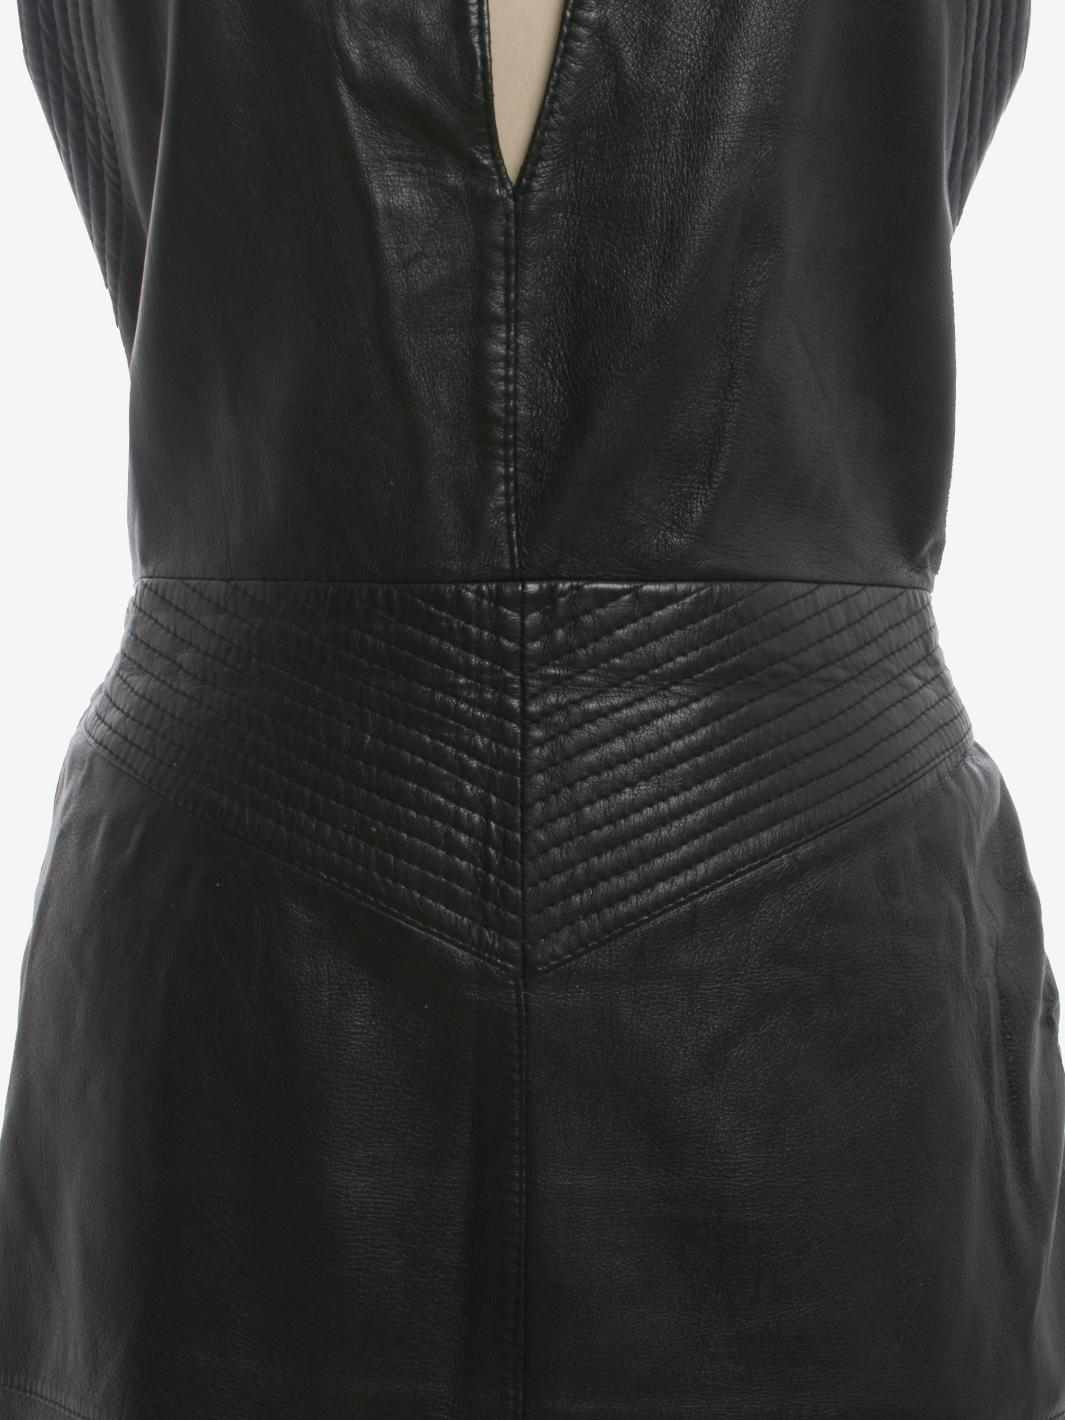 Gianfranco Ferré Leather Midi Dress - 80s For Sale 2